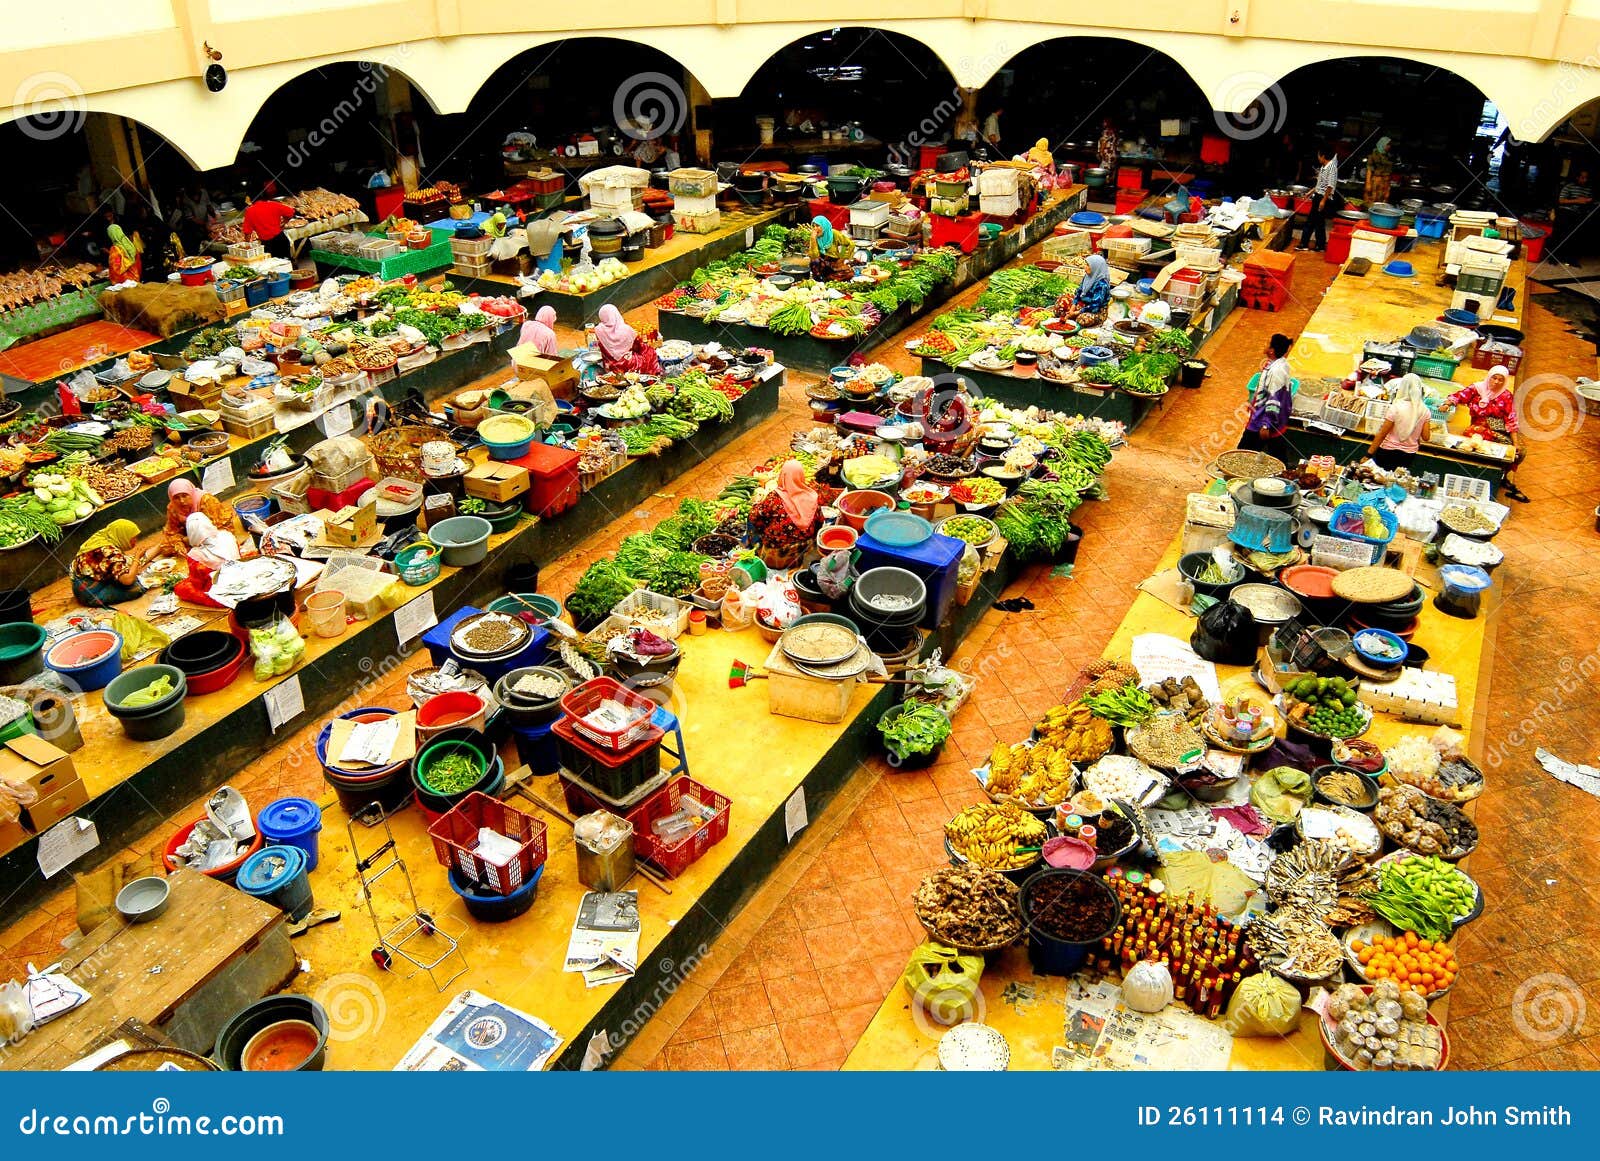  Kota  Bahru  Central Market  editorial stock image Image of 